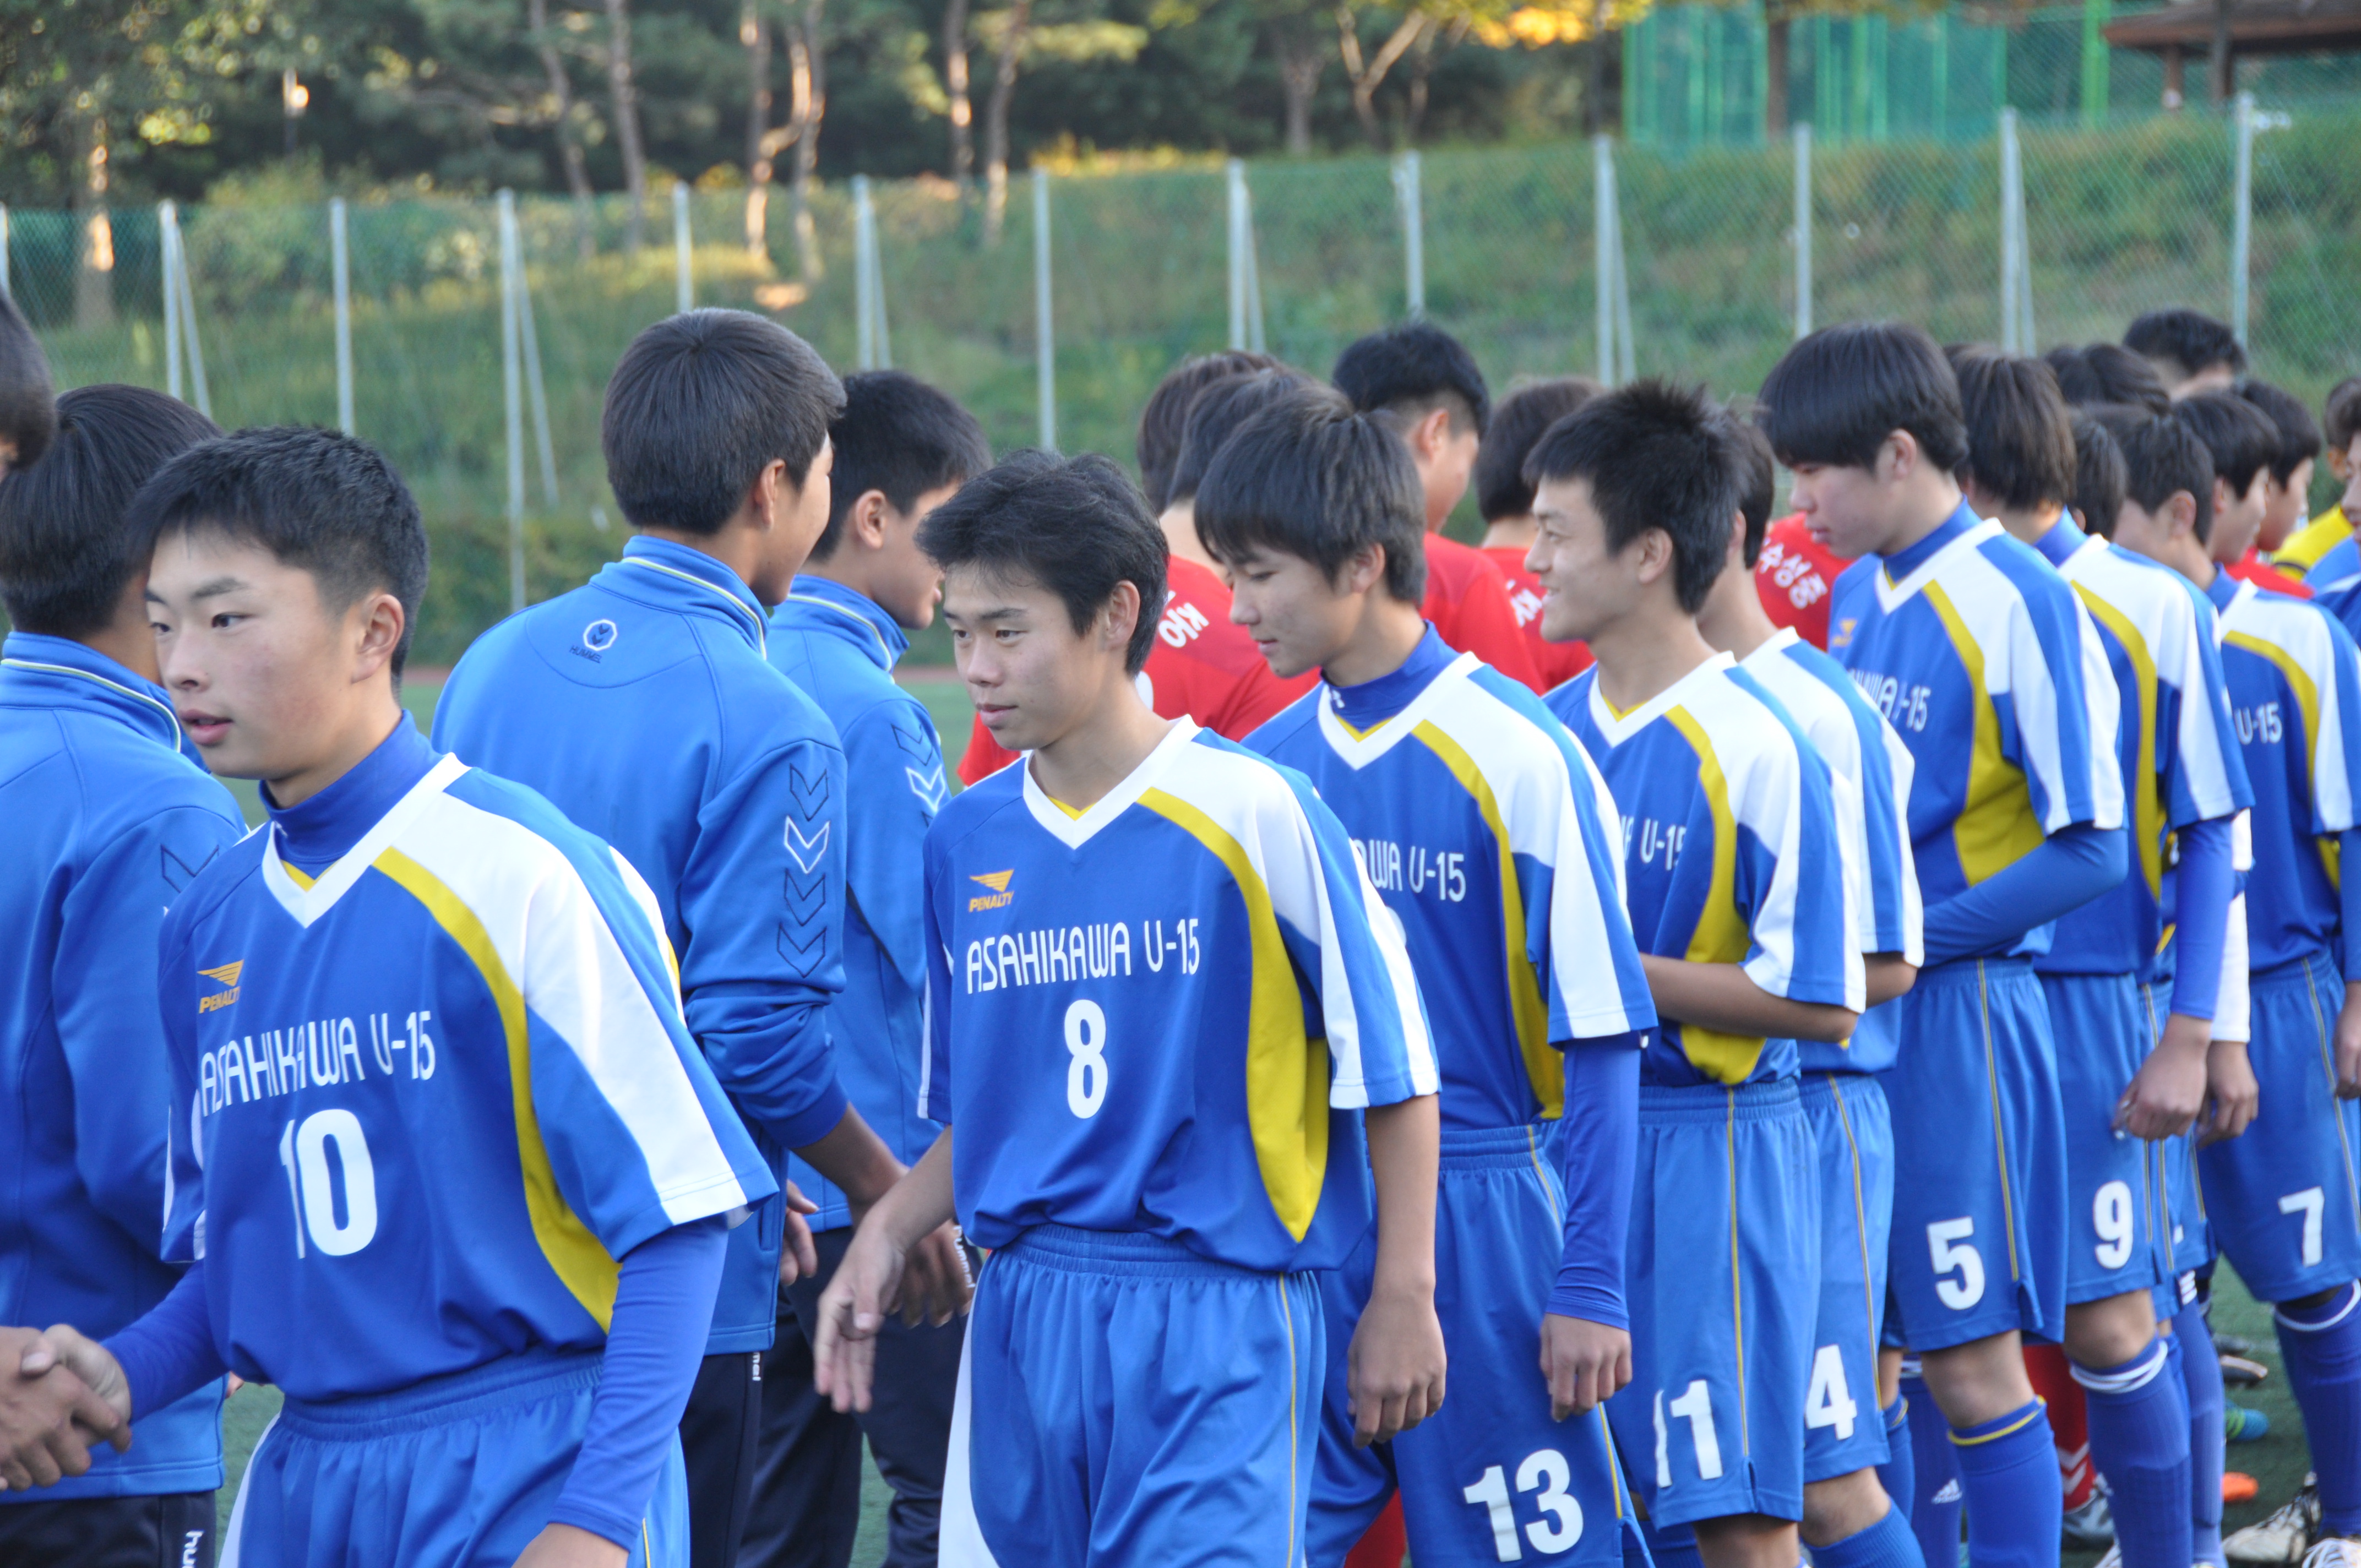 平成27年度日韓親善少年サッカー交流事業